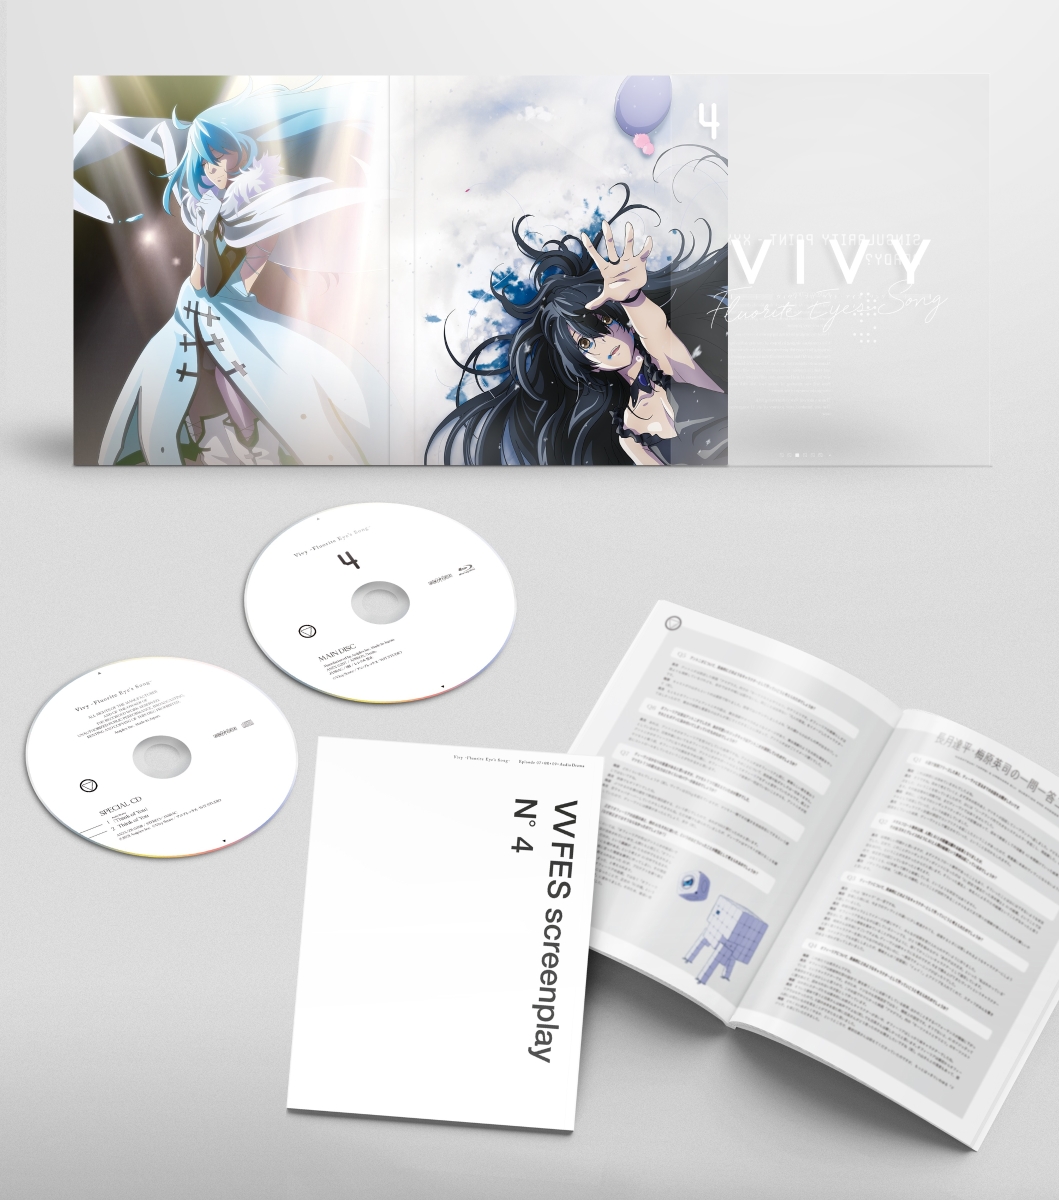 Vivy -Fluorite Eye’s Song- 4【完全生産限定版】【Blu-ray】 [ 種崎敦美 ]画像